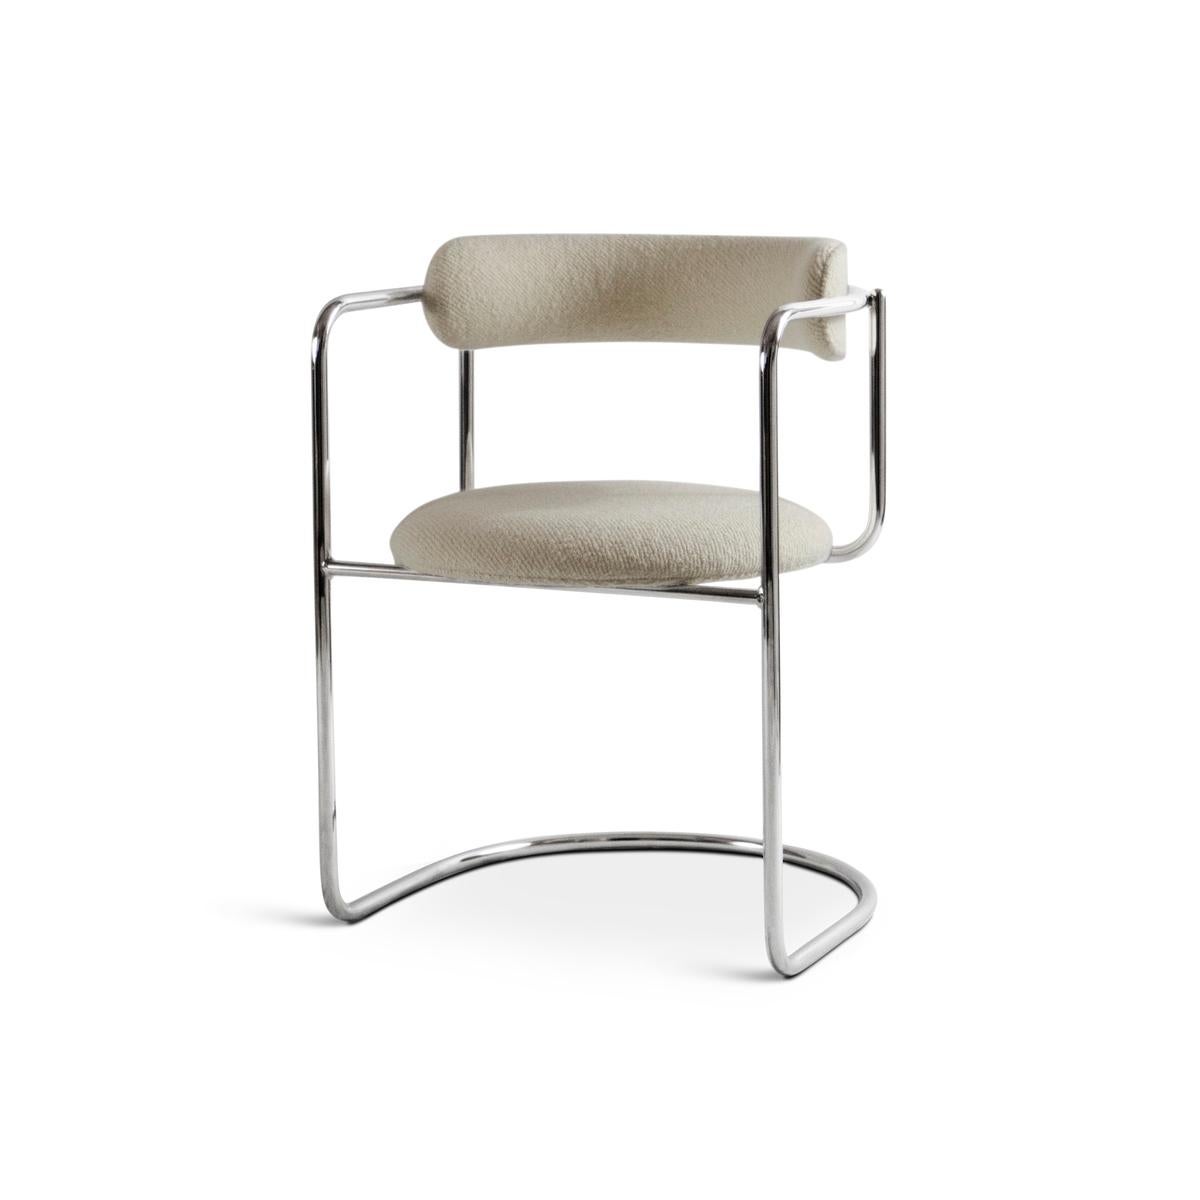 Contemporary Chair 'FF Cantilever', A JOY, 001, Chrome Legs For Sale 1